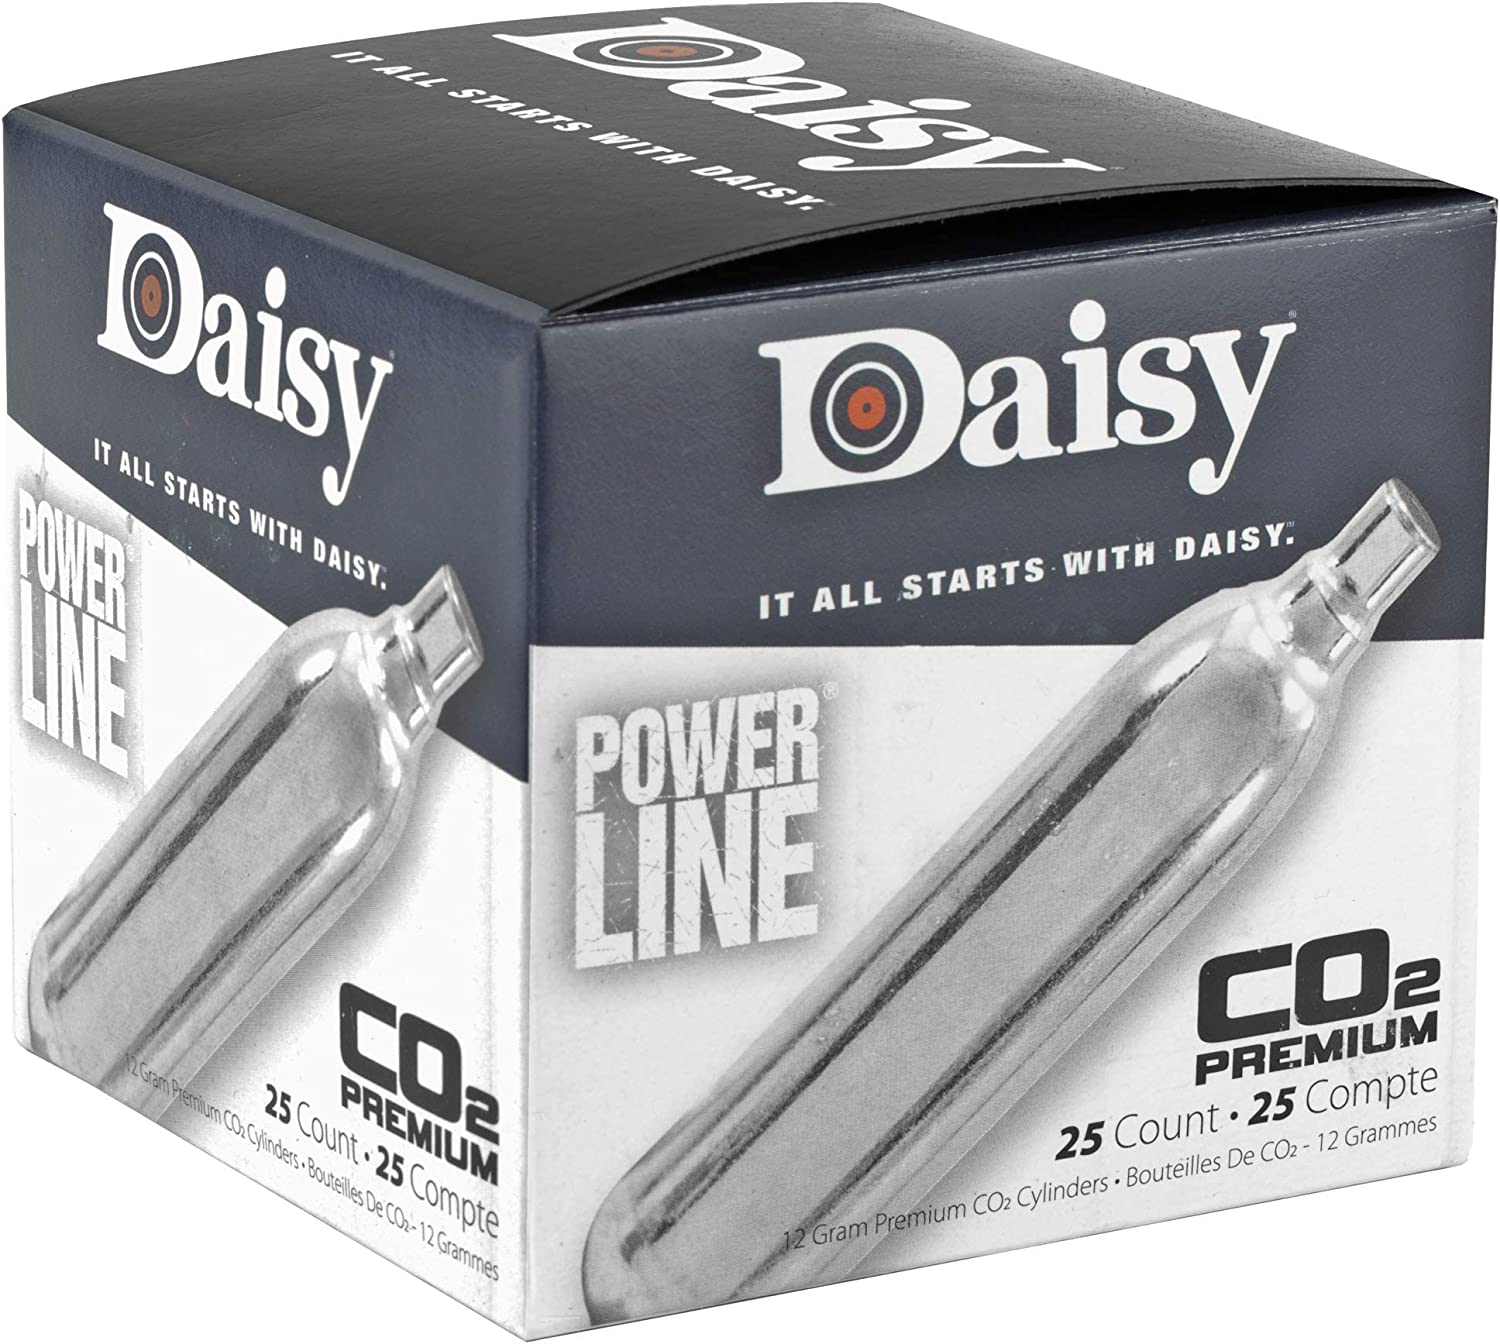 Daisy Powerline Premium CO2 Cylinder 25 Count